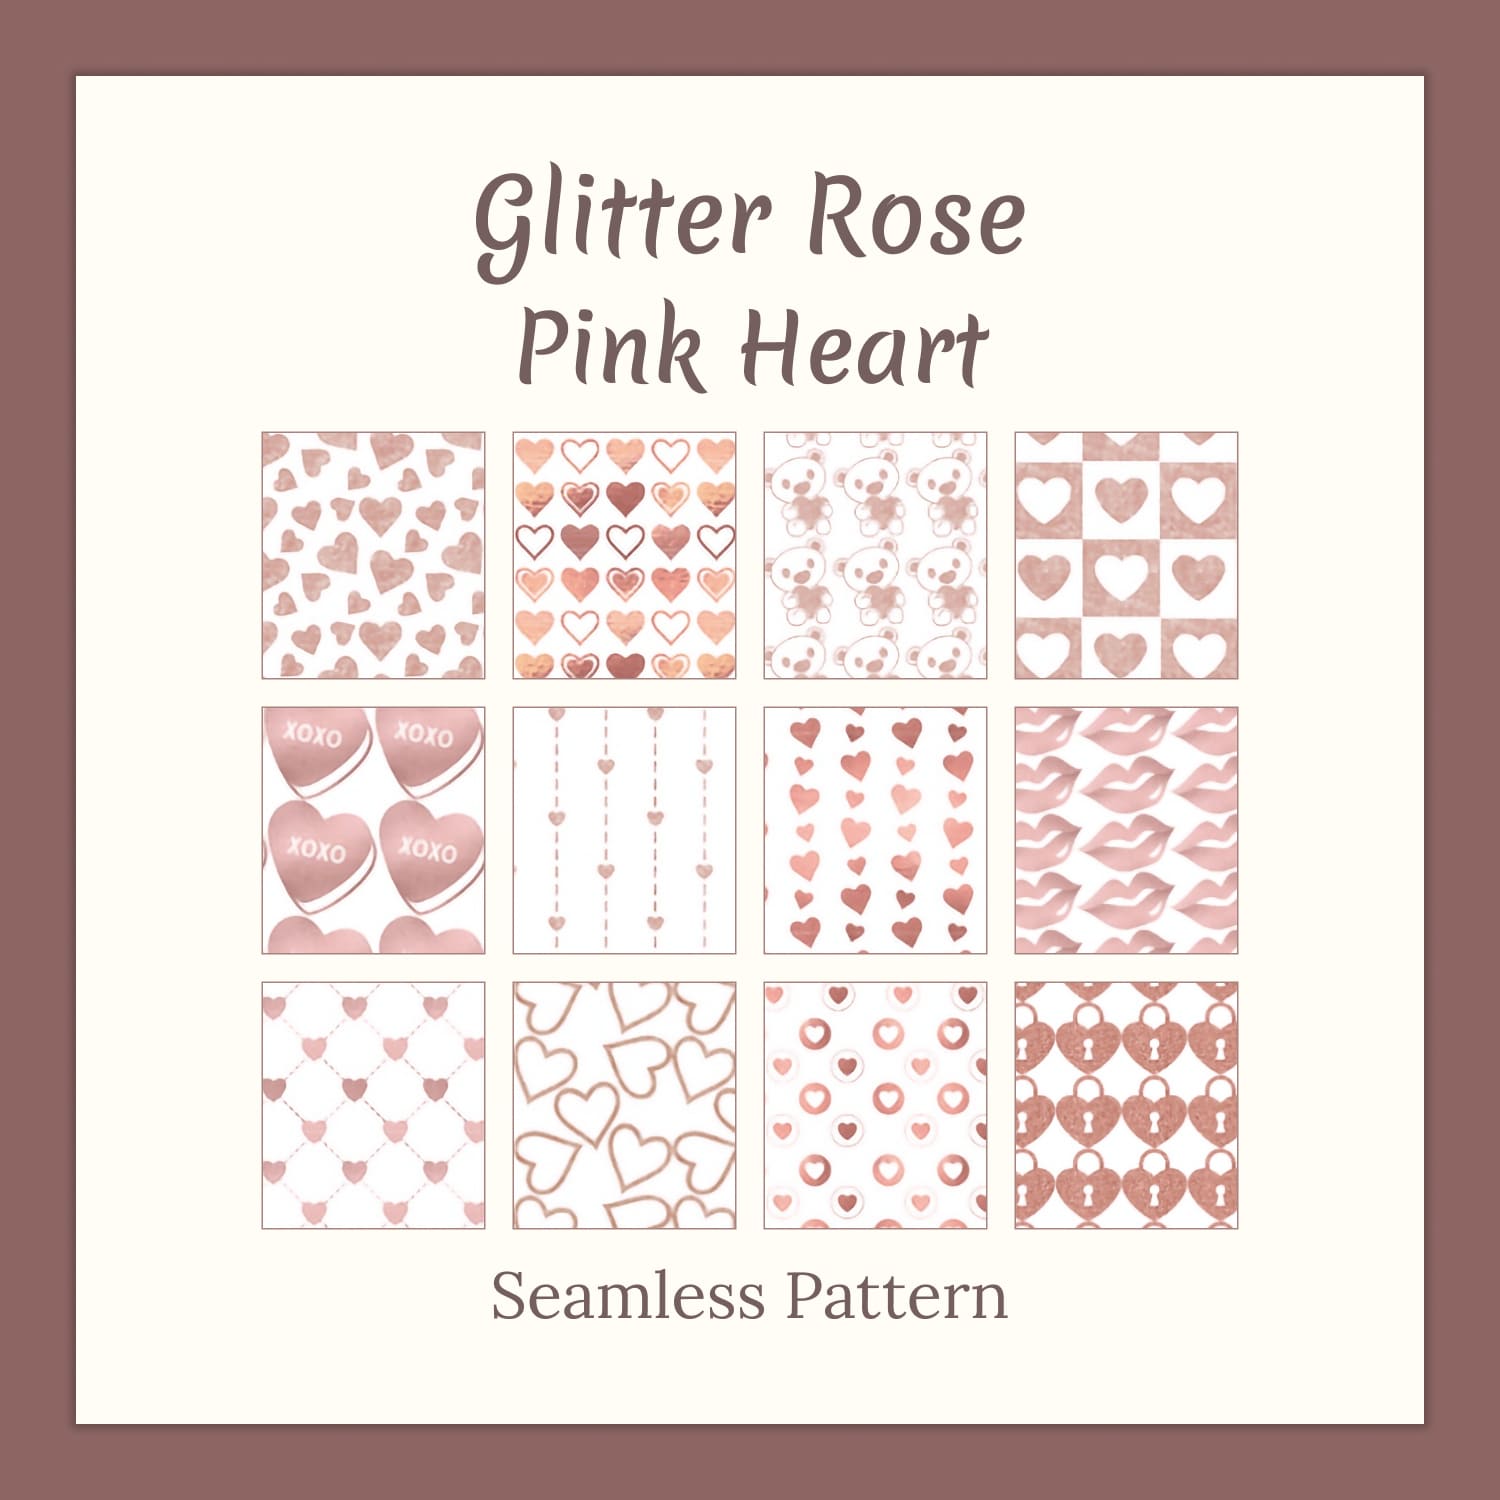 Glitter Rose Pink Heart Seamless Pattern.